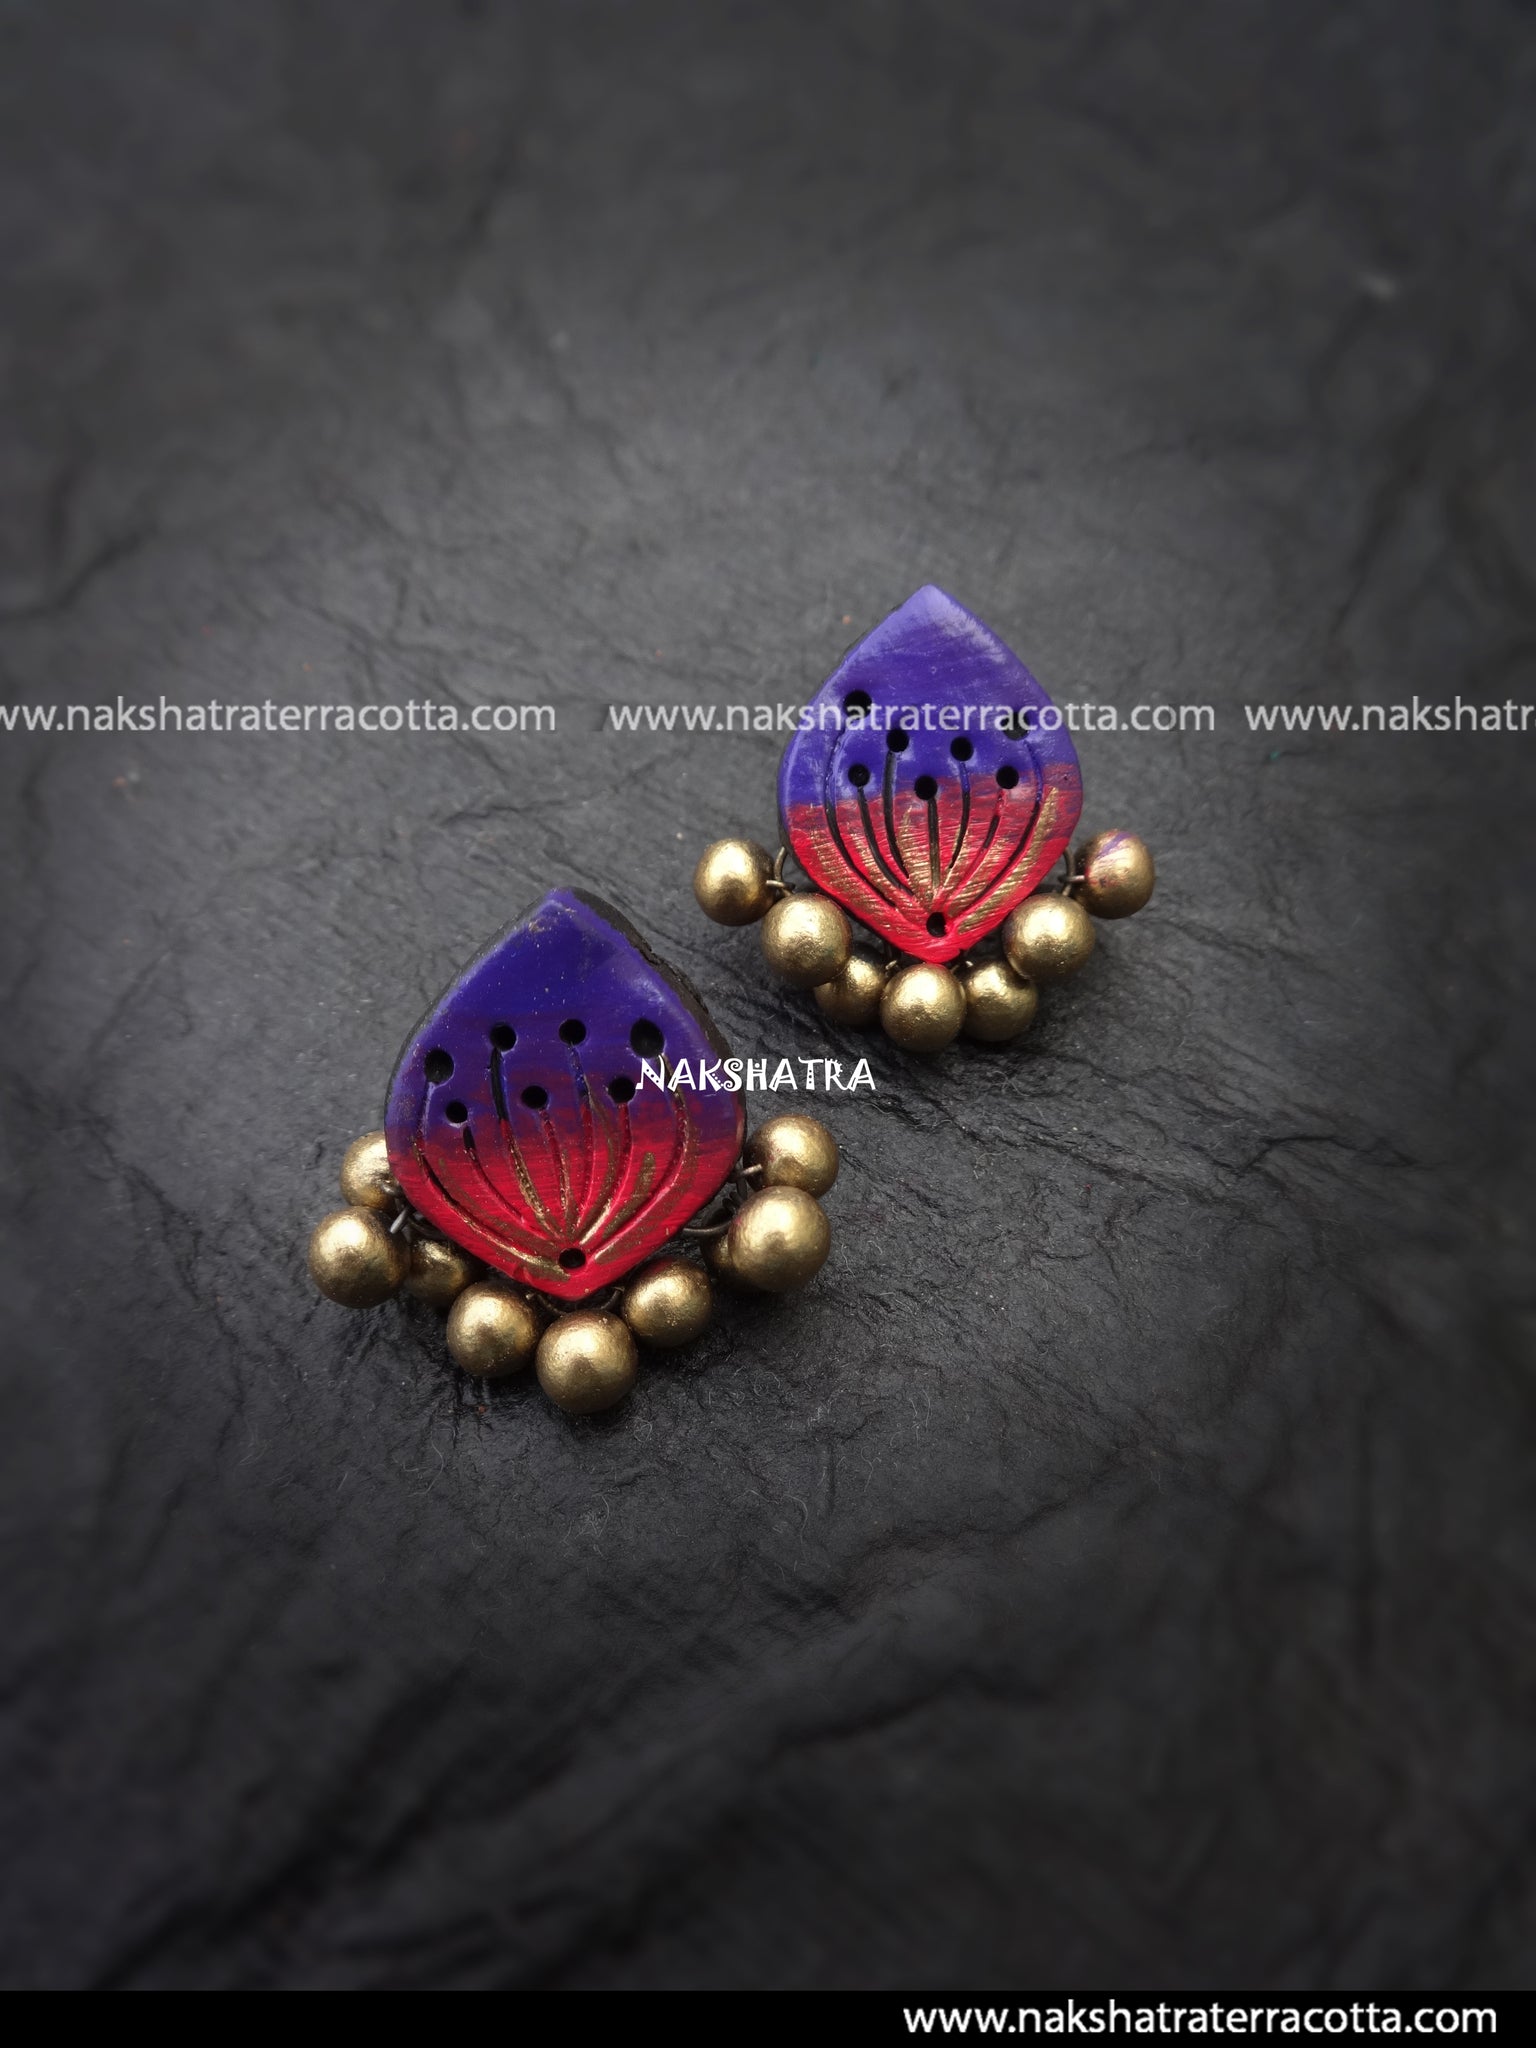 Buy Gold-Toned & Purple Earrings for Women by Youbella Online | Ajio.com